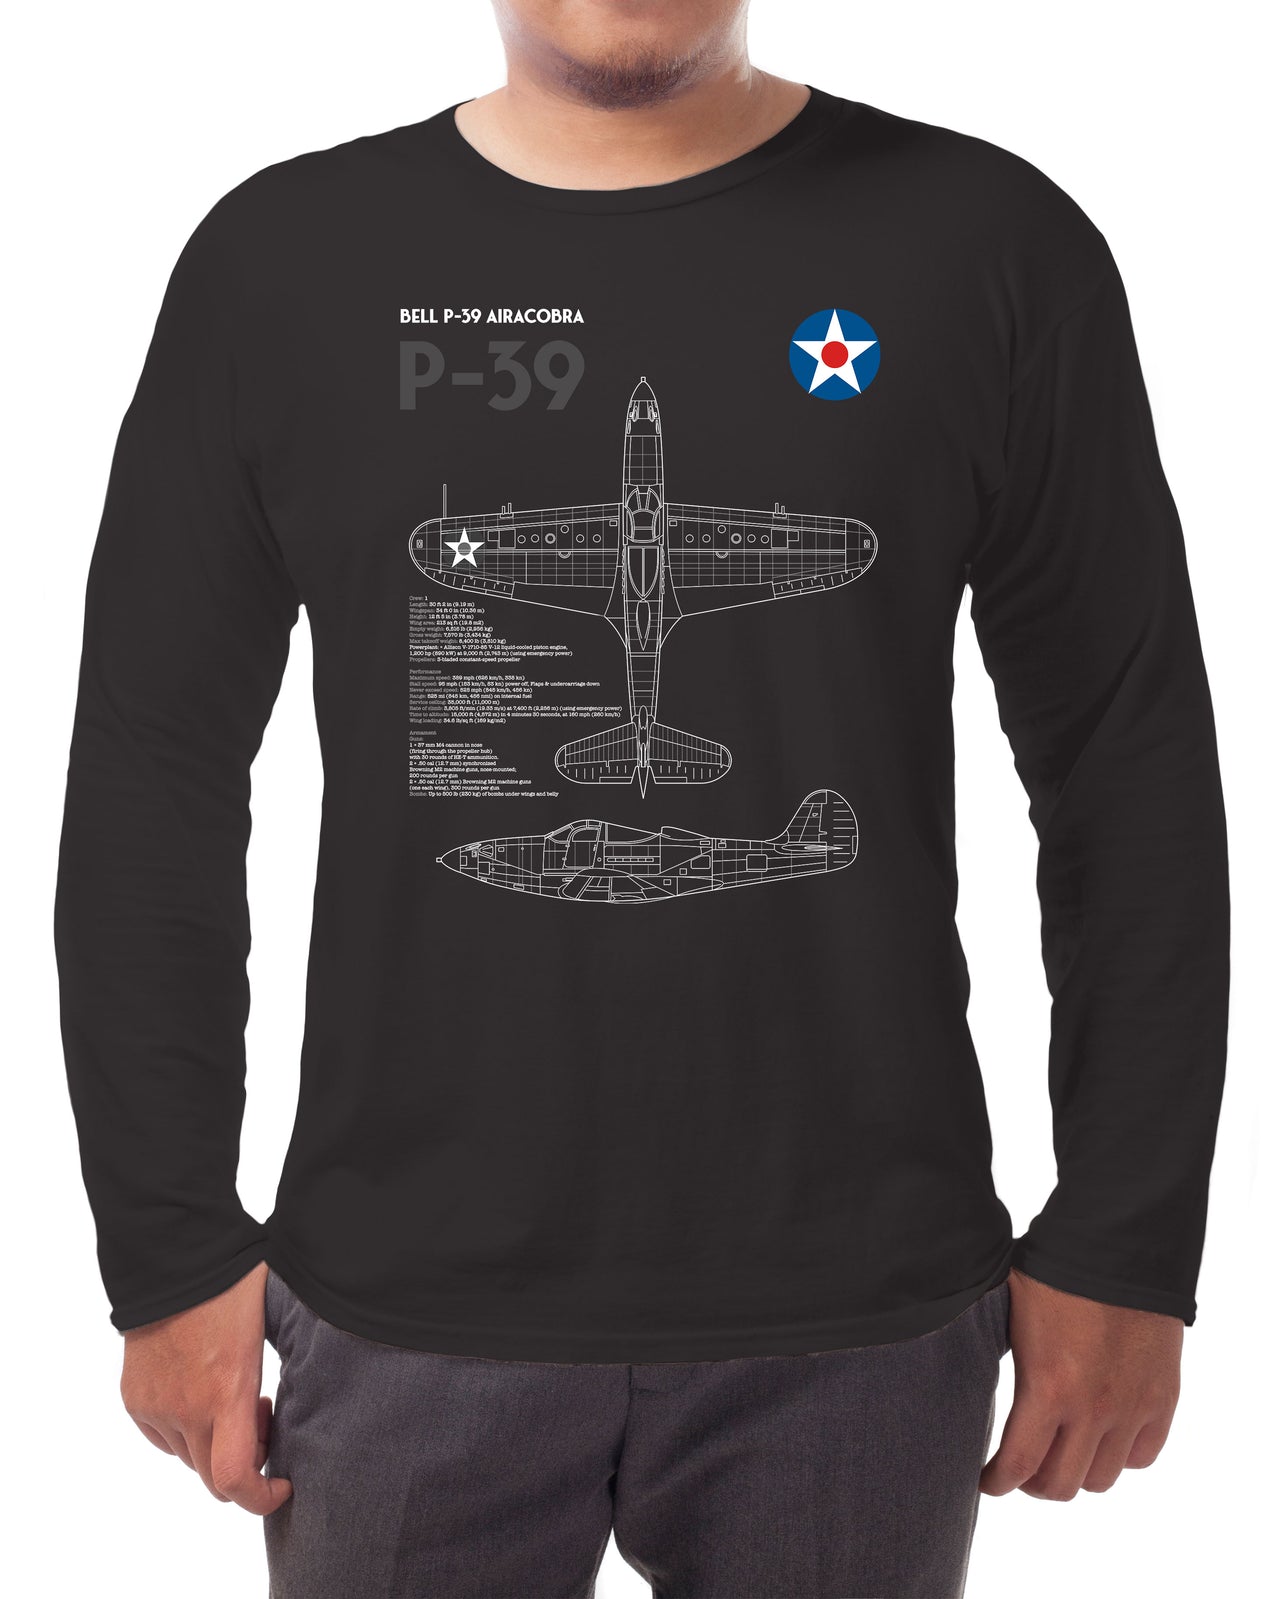 P-39 Airacobra - Long-sleeve T-shirt